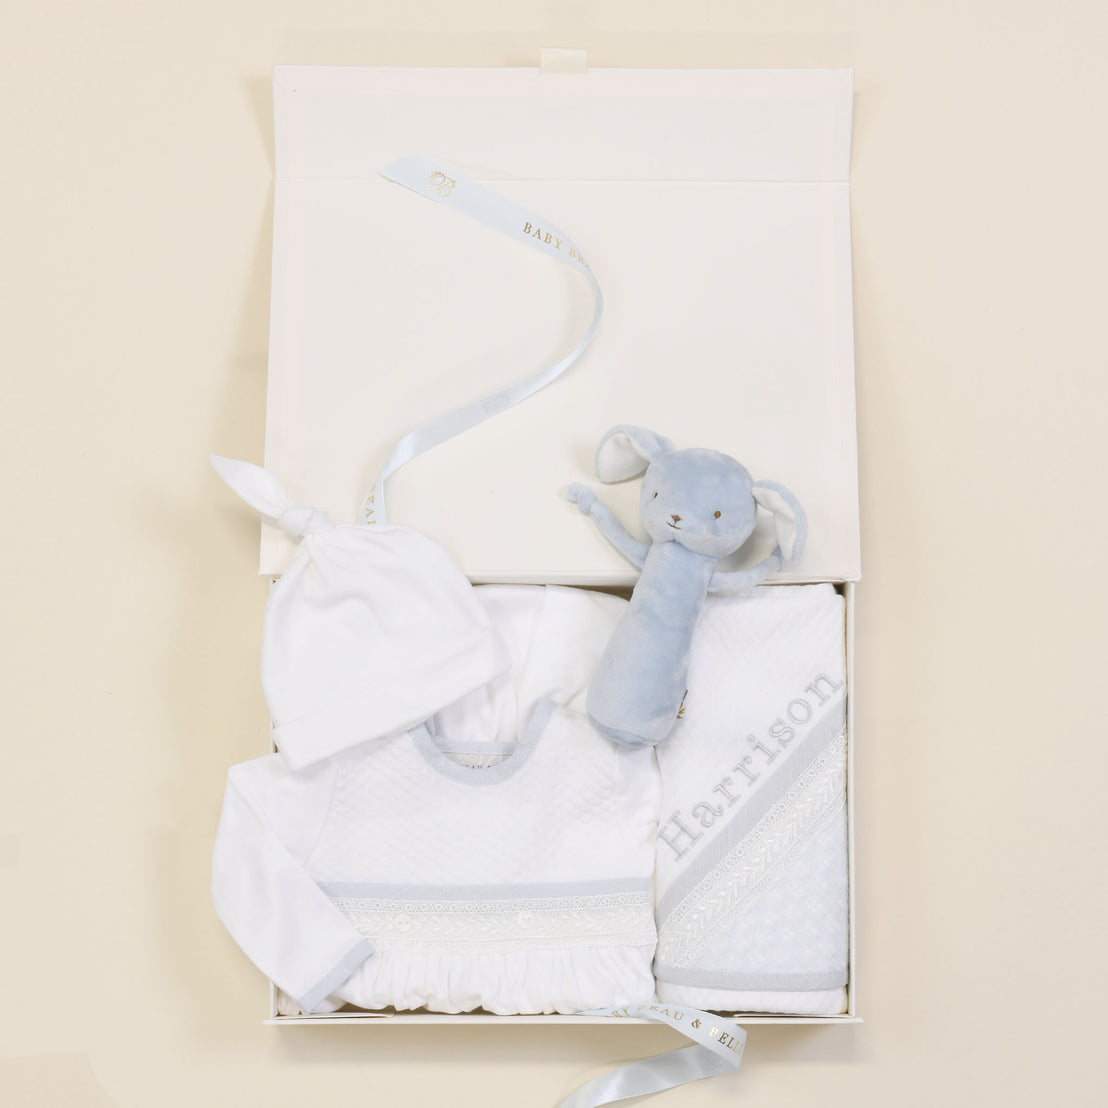 Harrison Newborn Gift Set - Save 10%